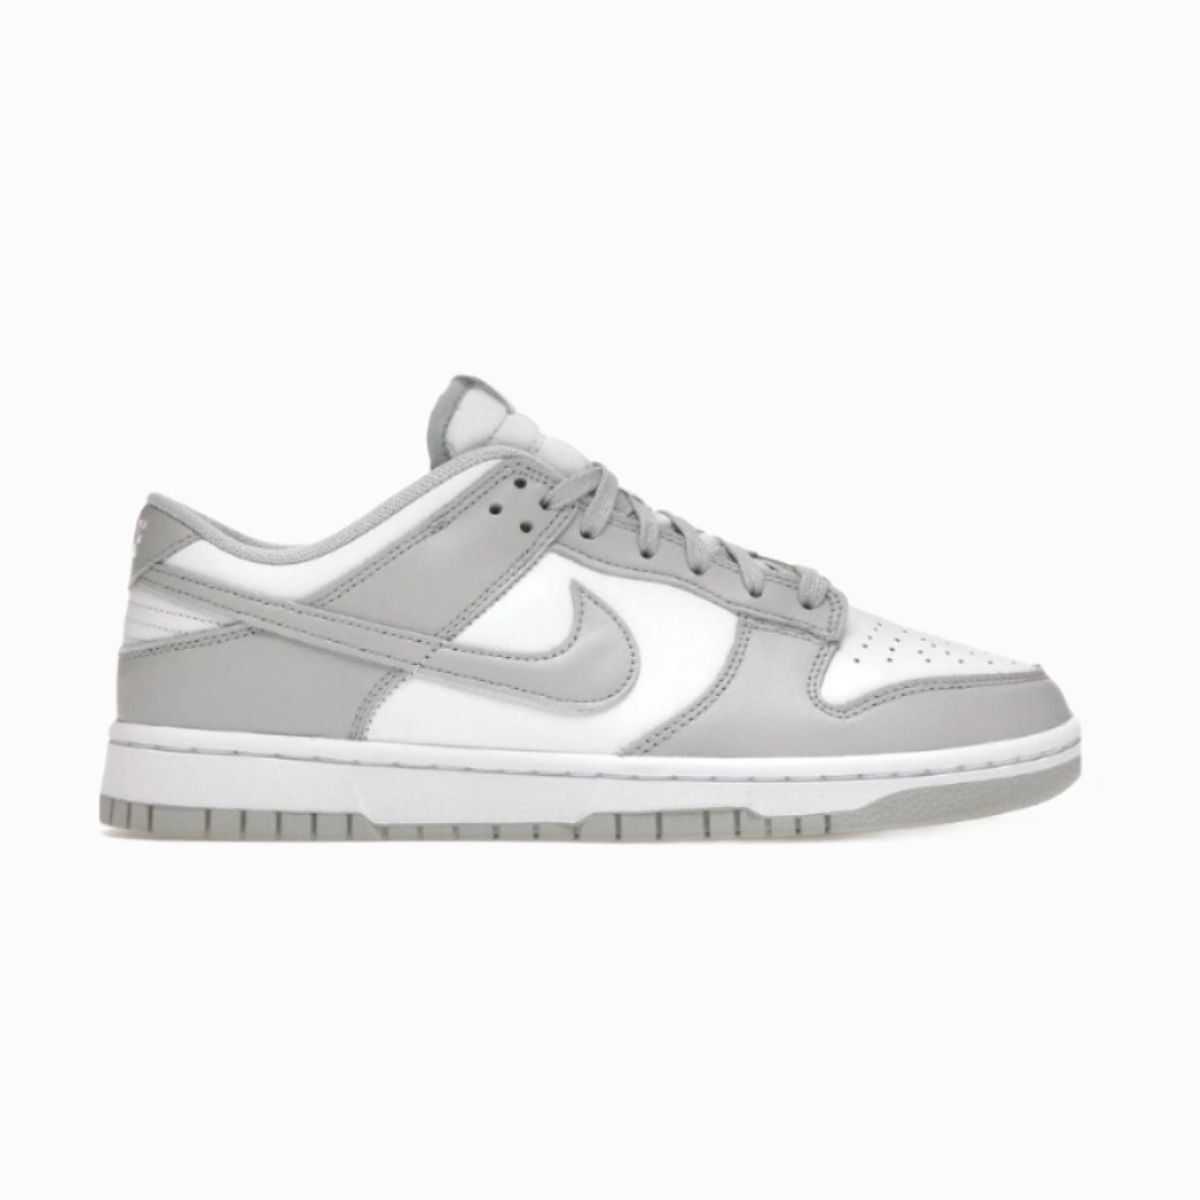 Light Grey Nike Dunks Shoelace Replacements - Kicks Shoelaces